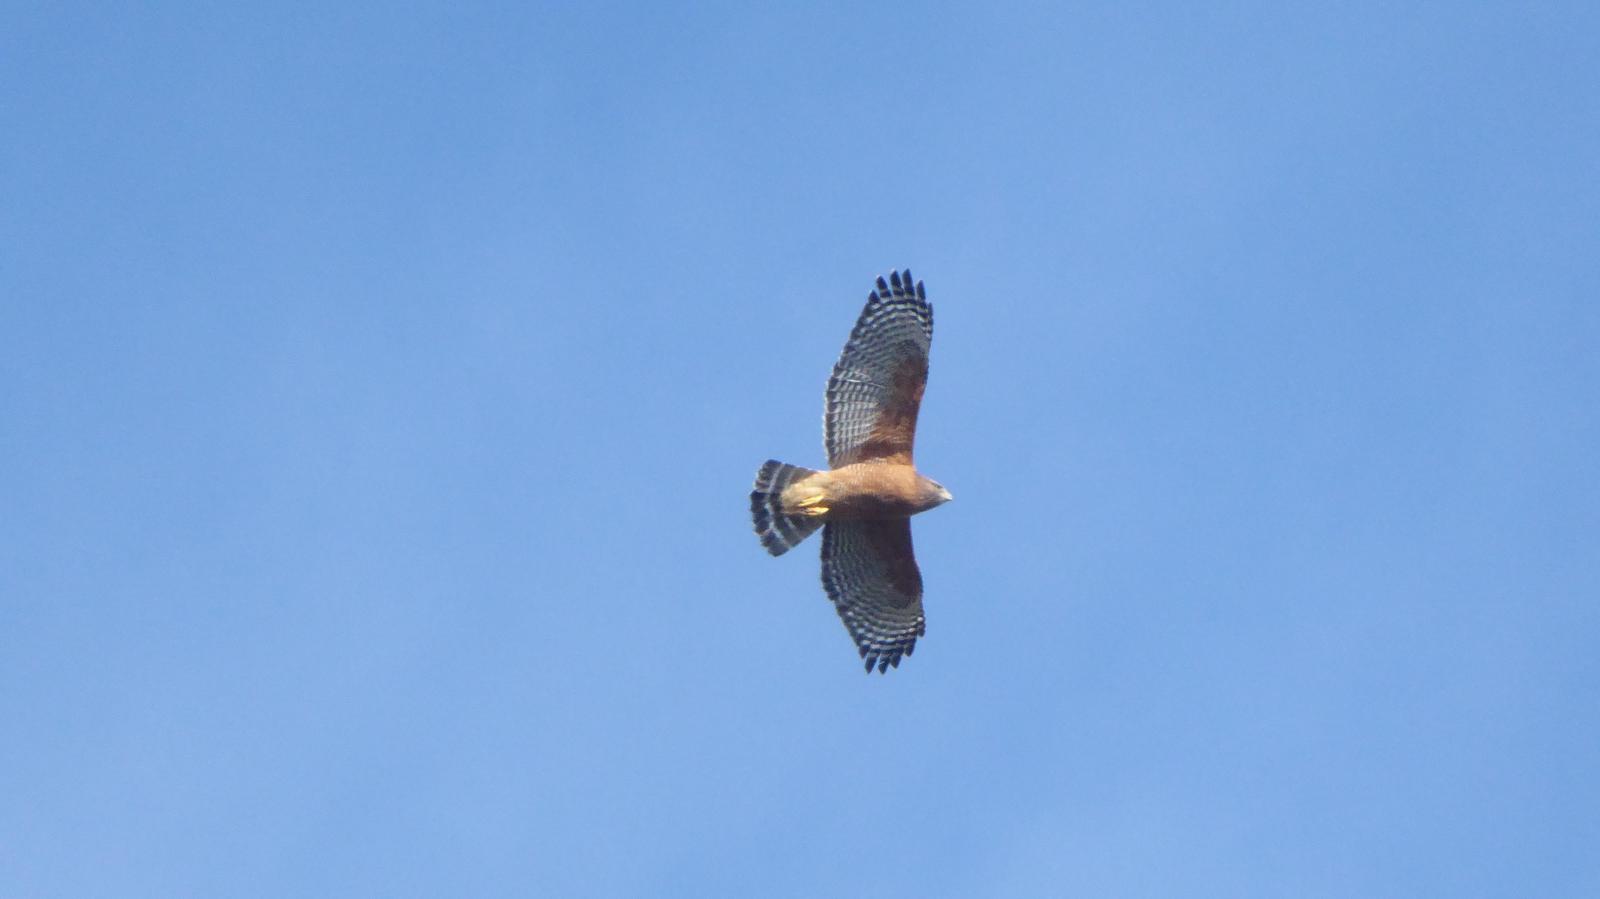 Red-shouldered Hawk Photo by Daliel Leite